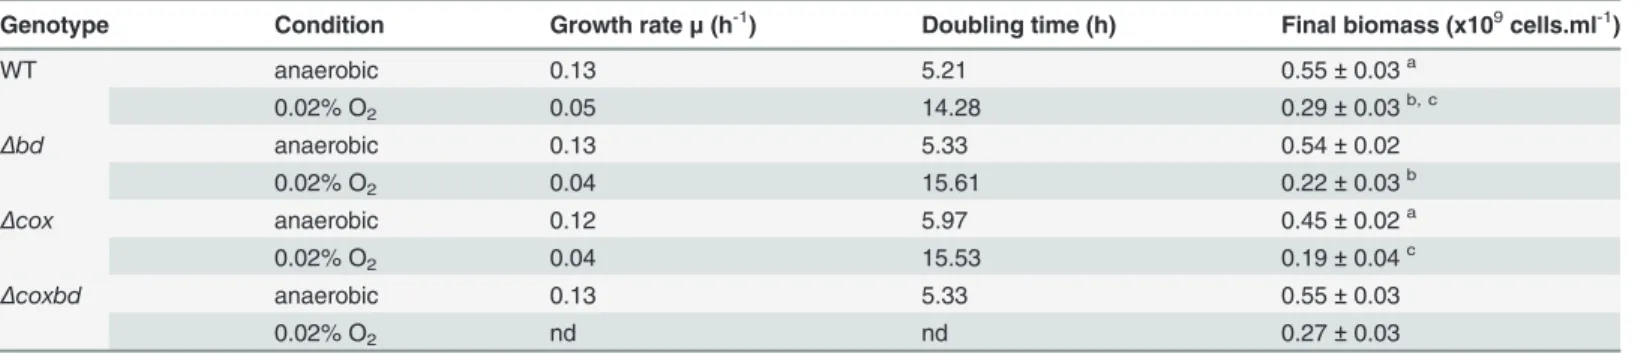 Table 1. Growth parameters for the Desulfovibrio vulgaris Hildenborough strains.